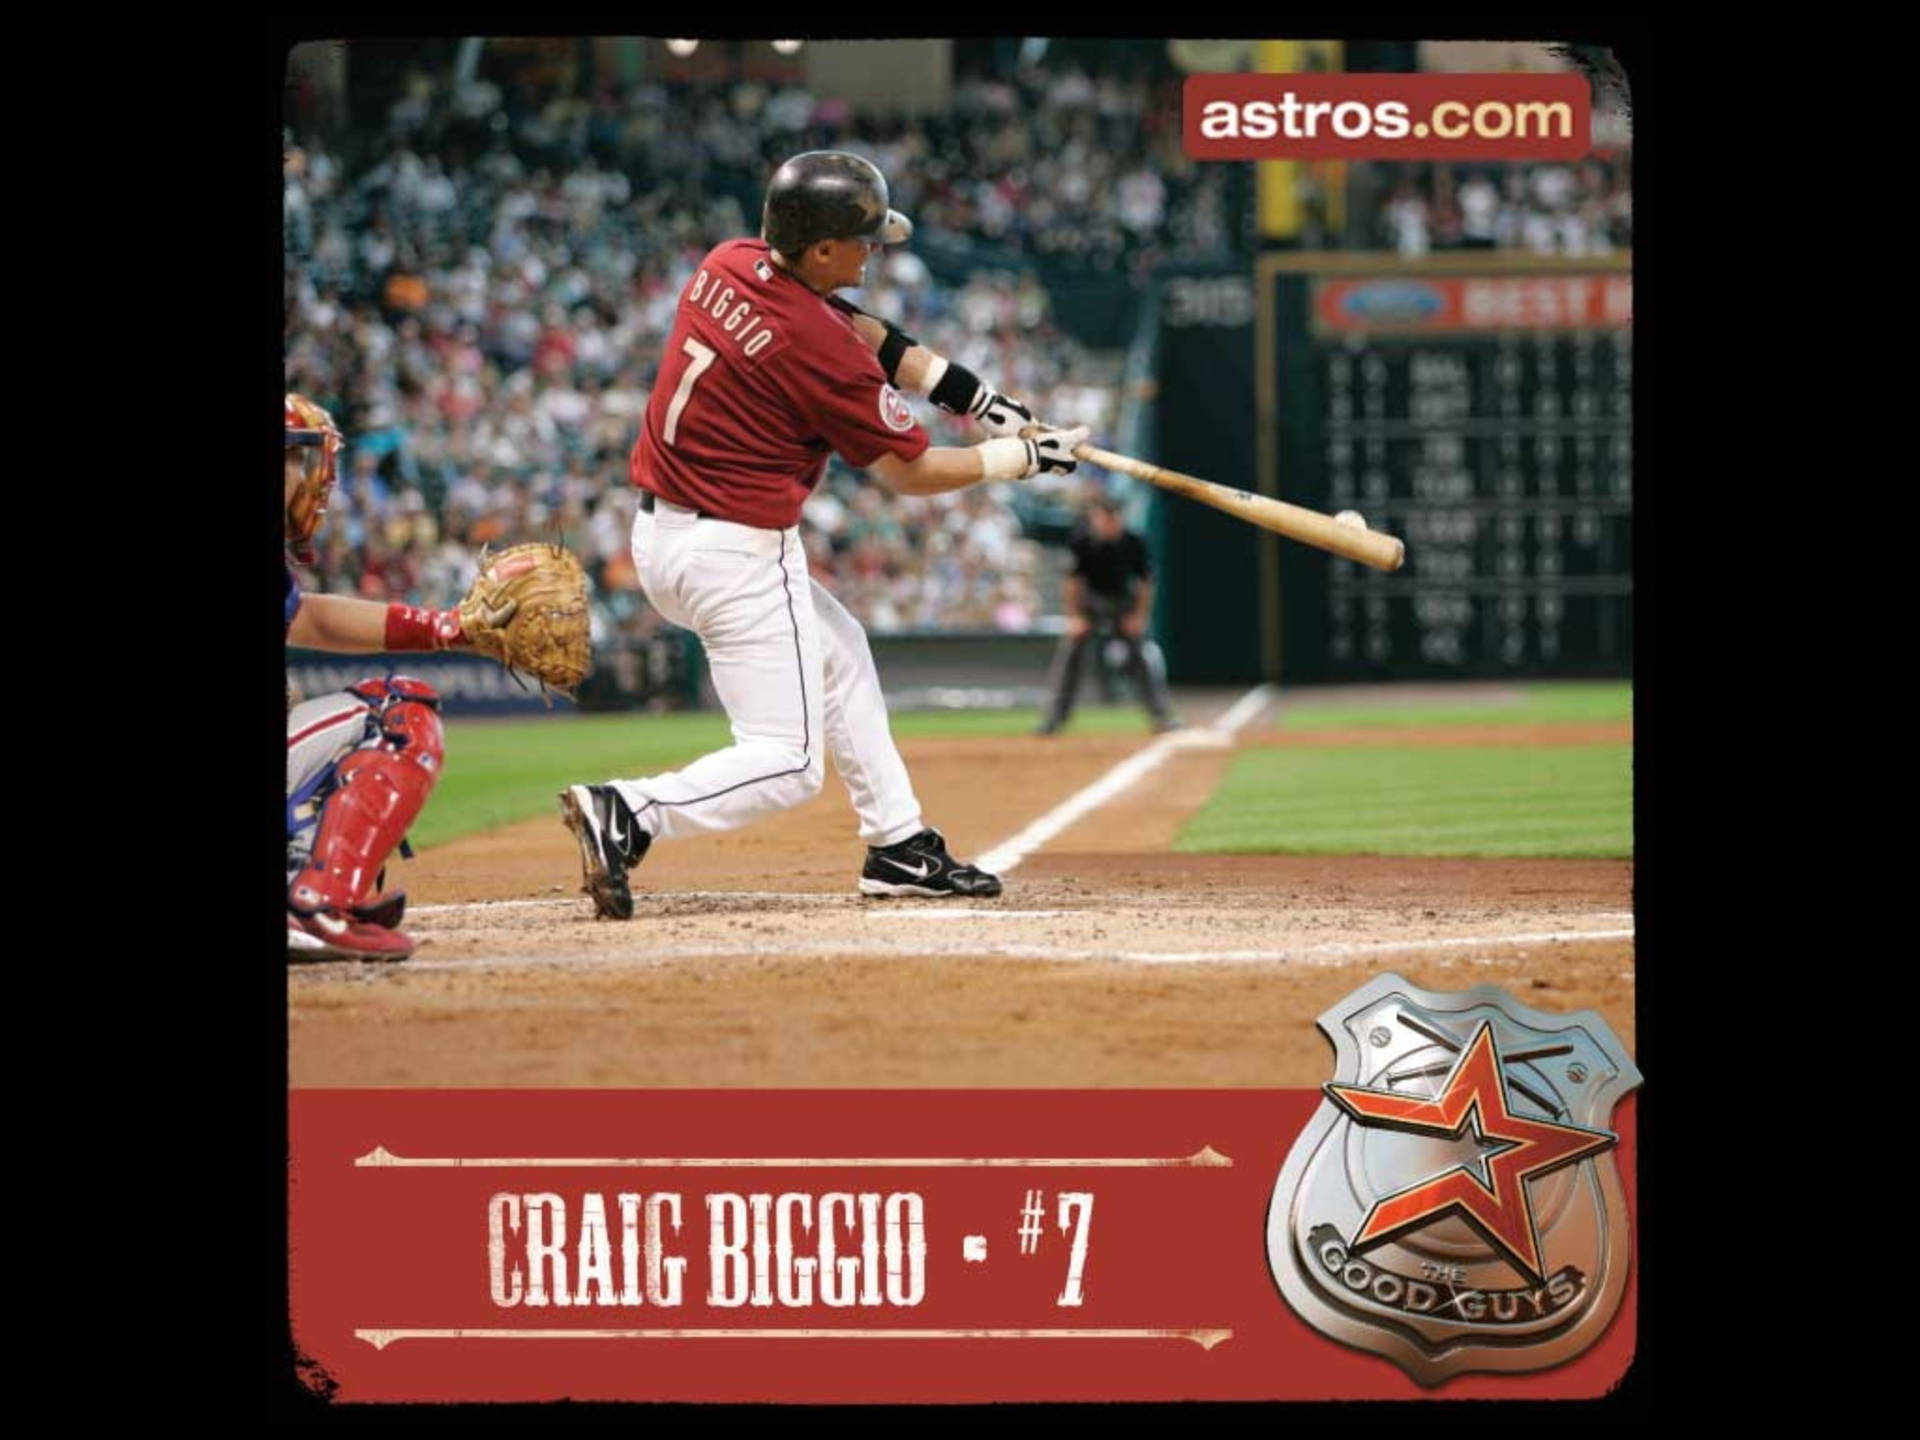 Craig Biggio Baseball Poster Wallpaper